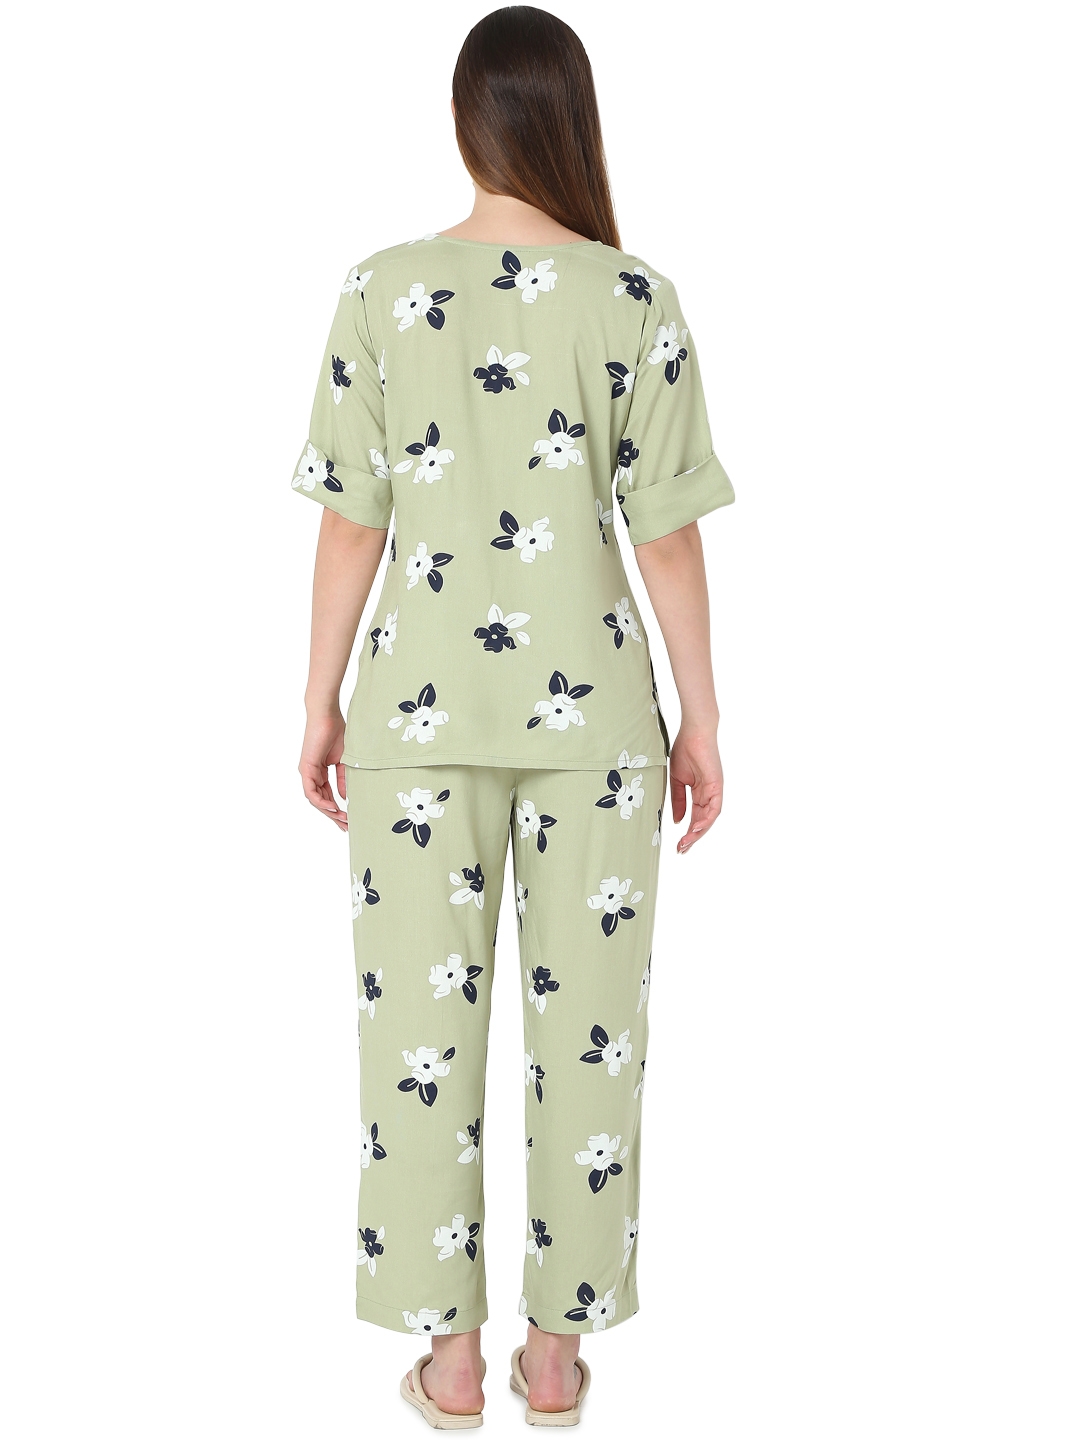 Smarty Pants | Smarty Pants women's cotton olive floral print night suit.  2